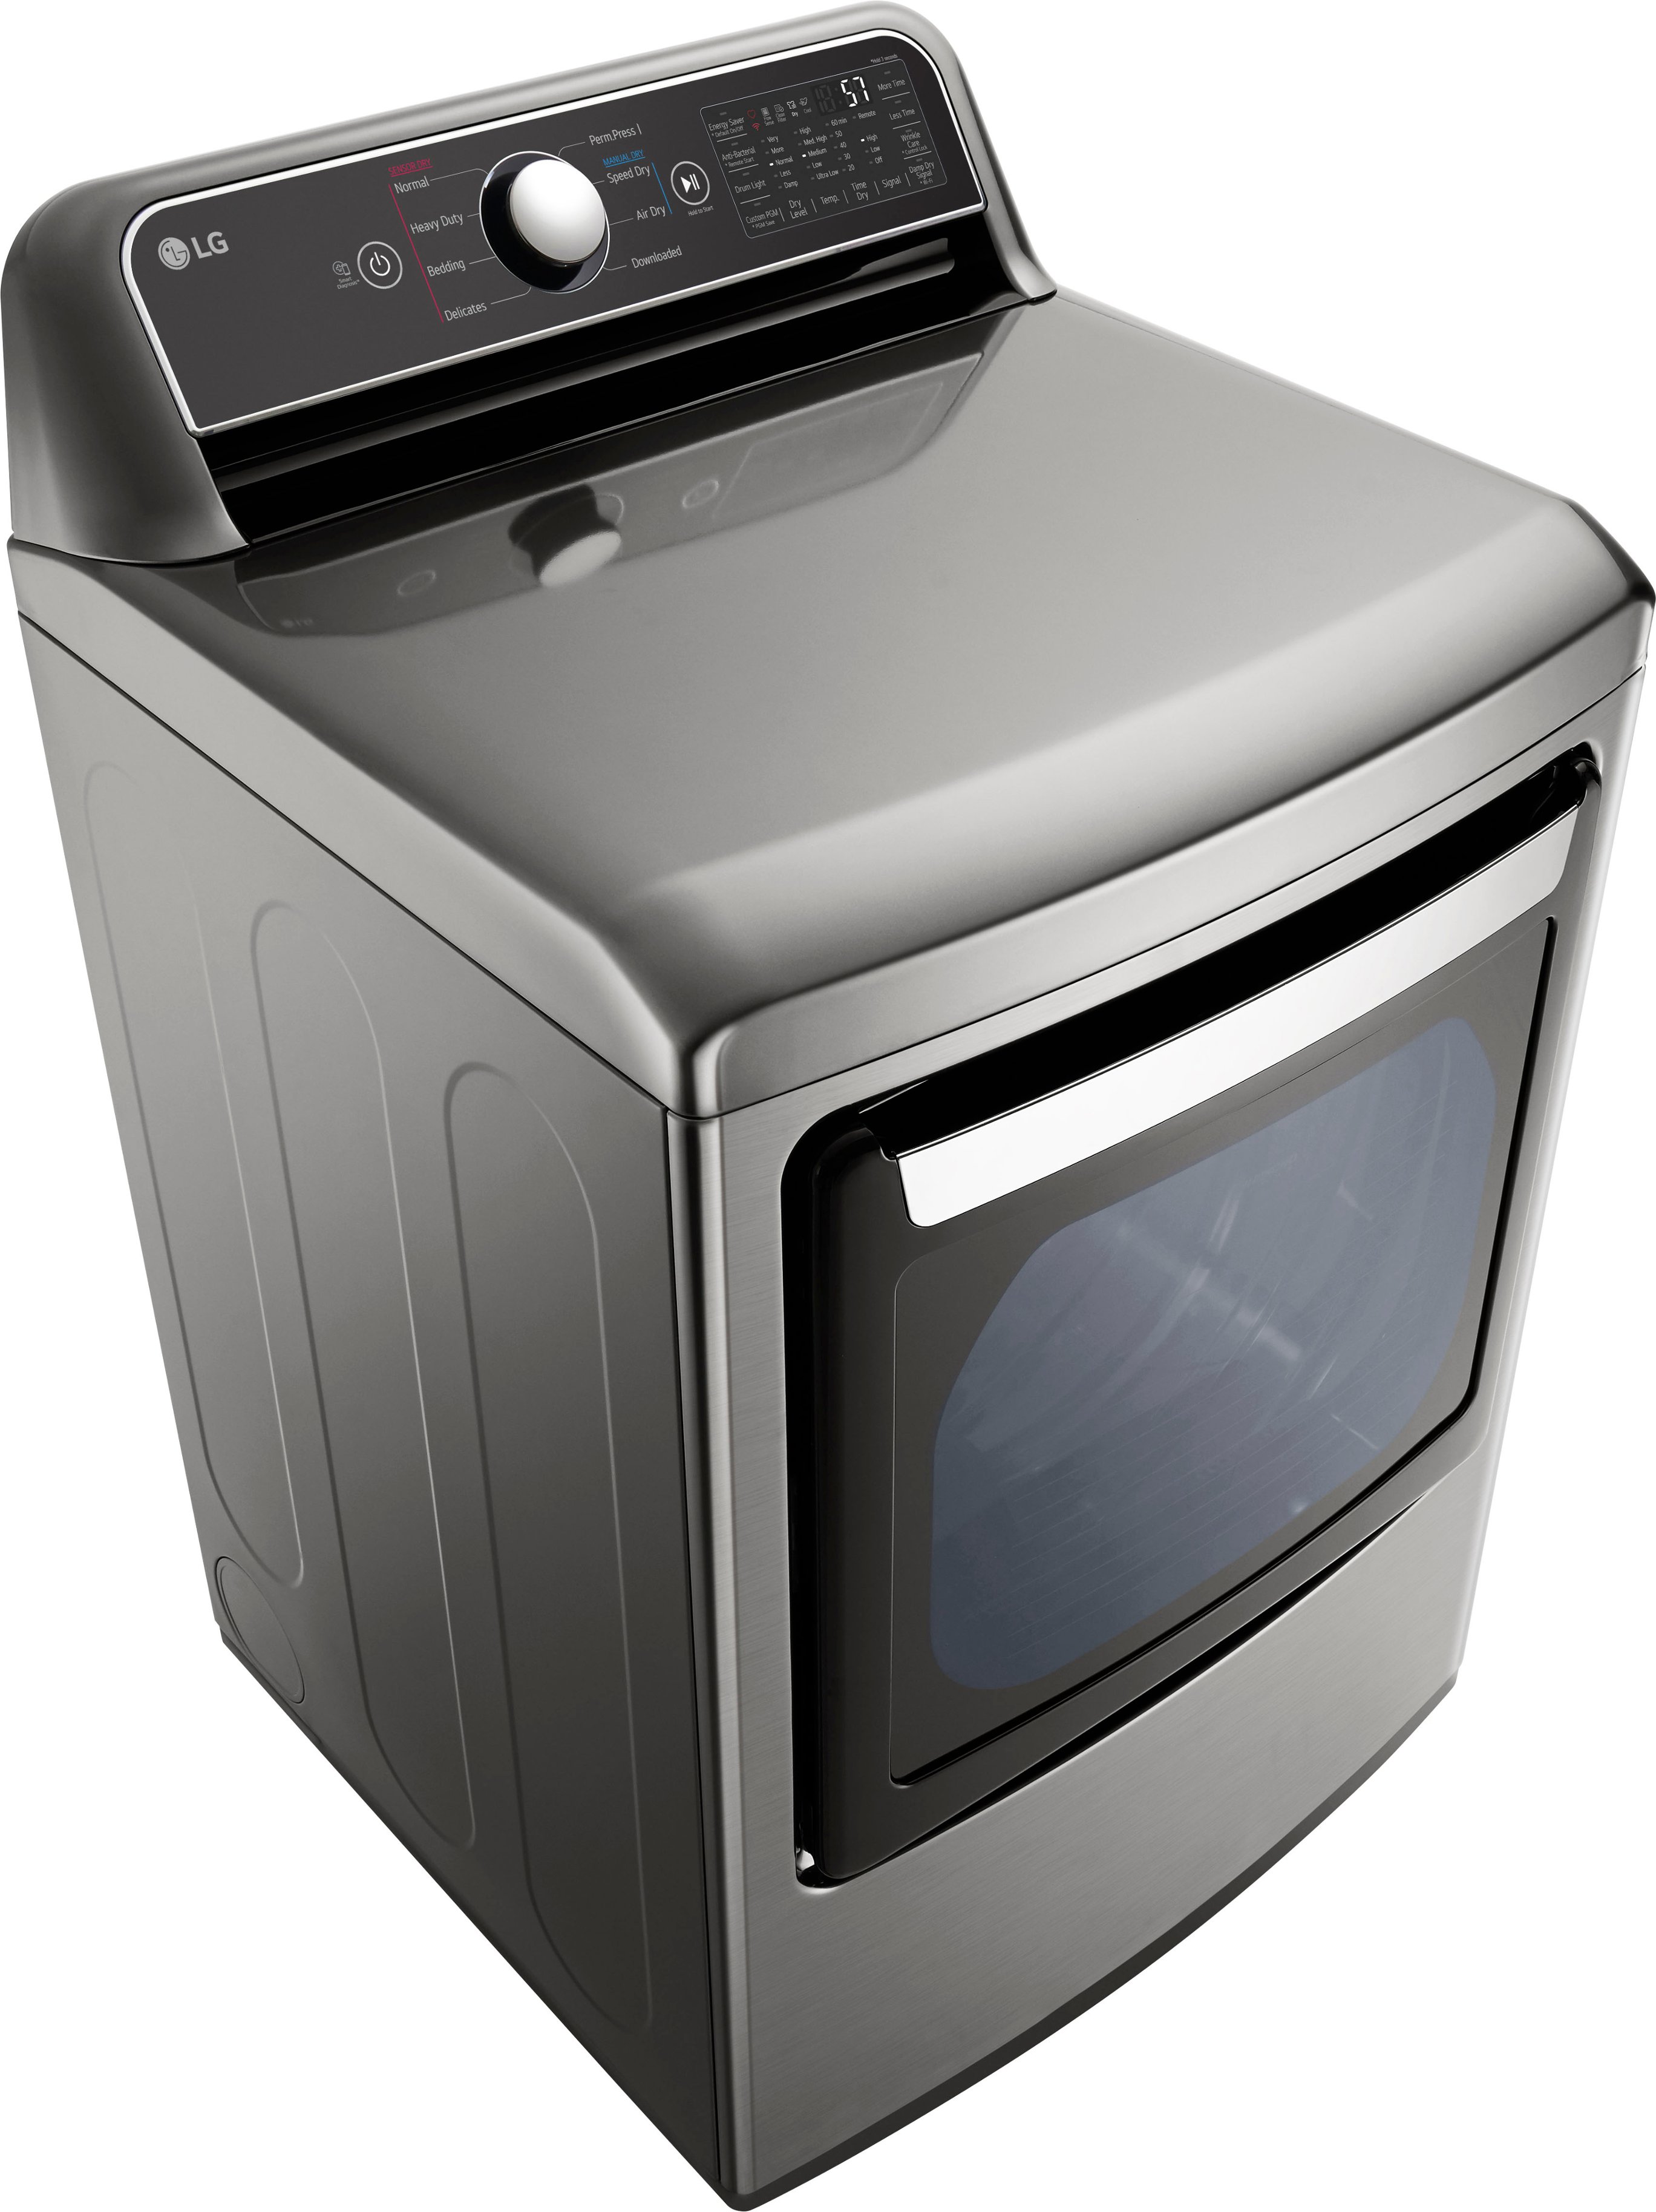 Angle View: LG - 7.3 Cu. Ft. Smart Gas Dryer with EasyLoad Door - Graphite Steel